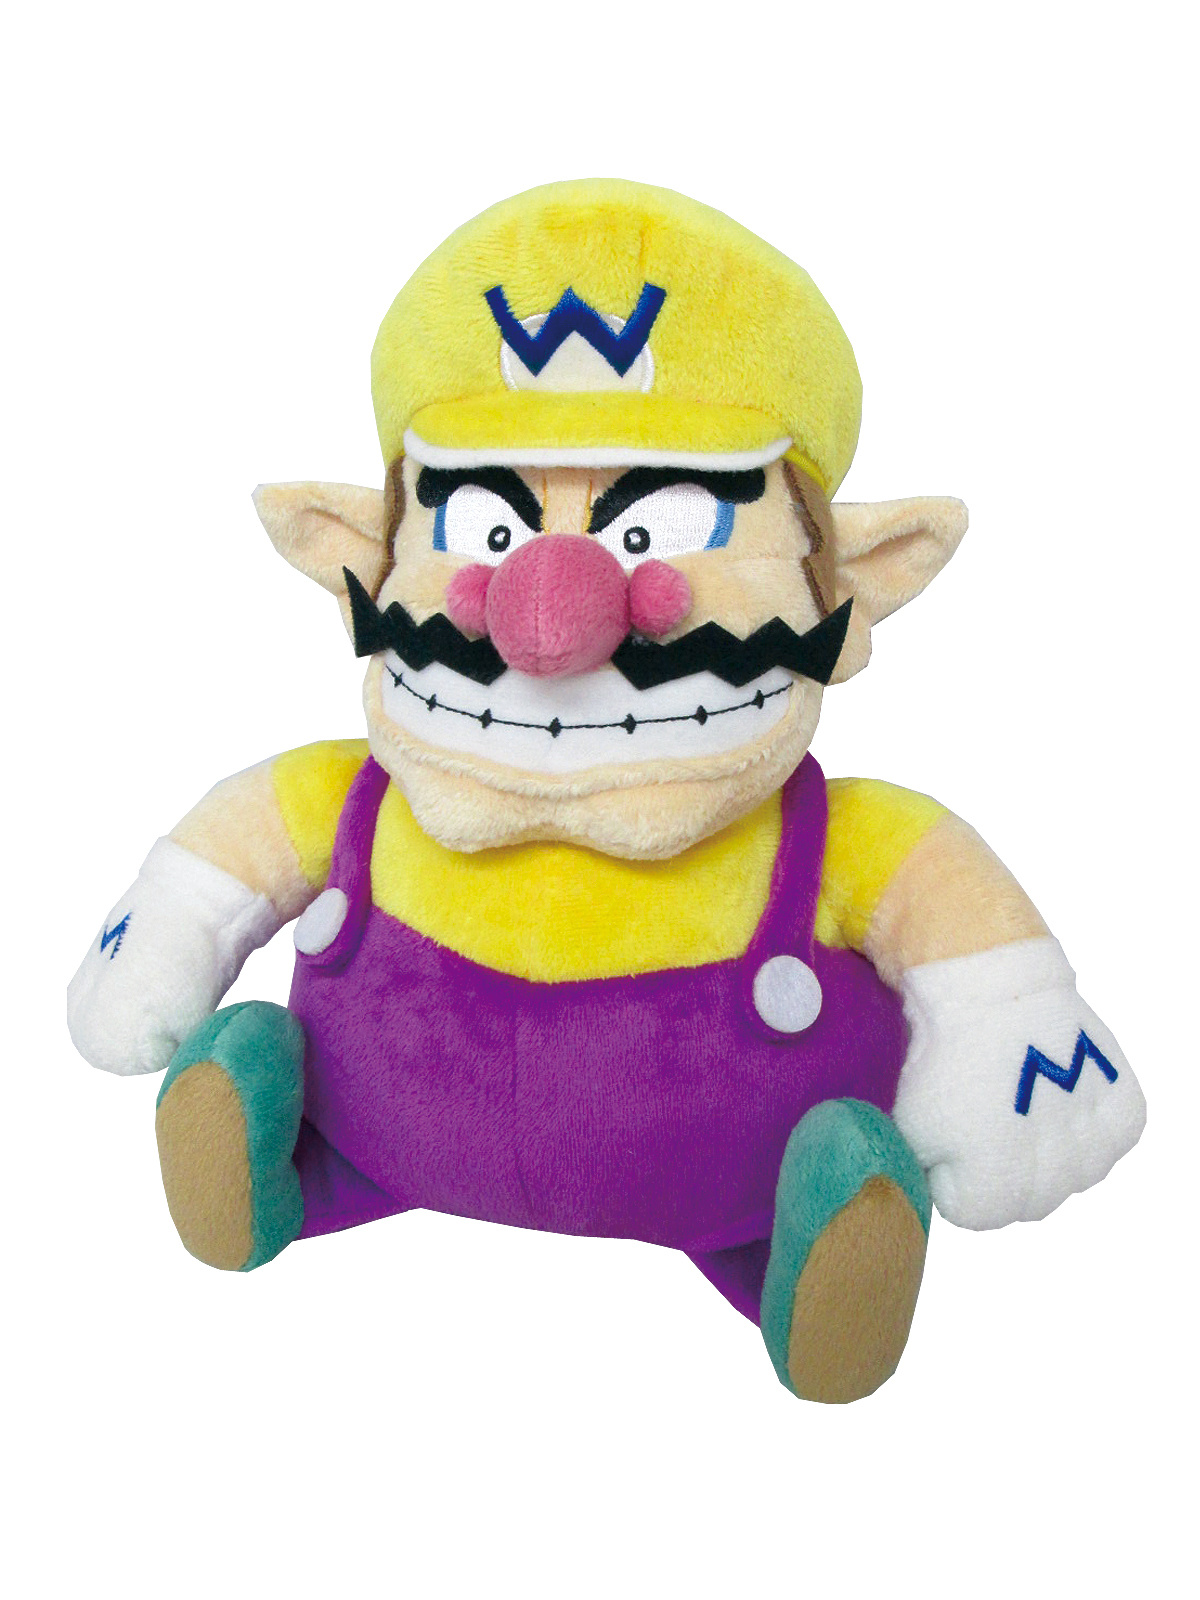 Mario - Wario 10" Plush